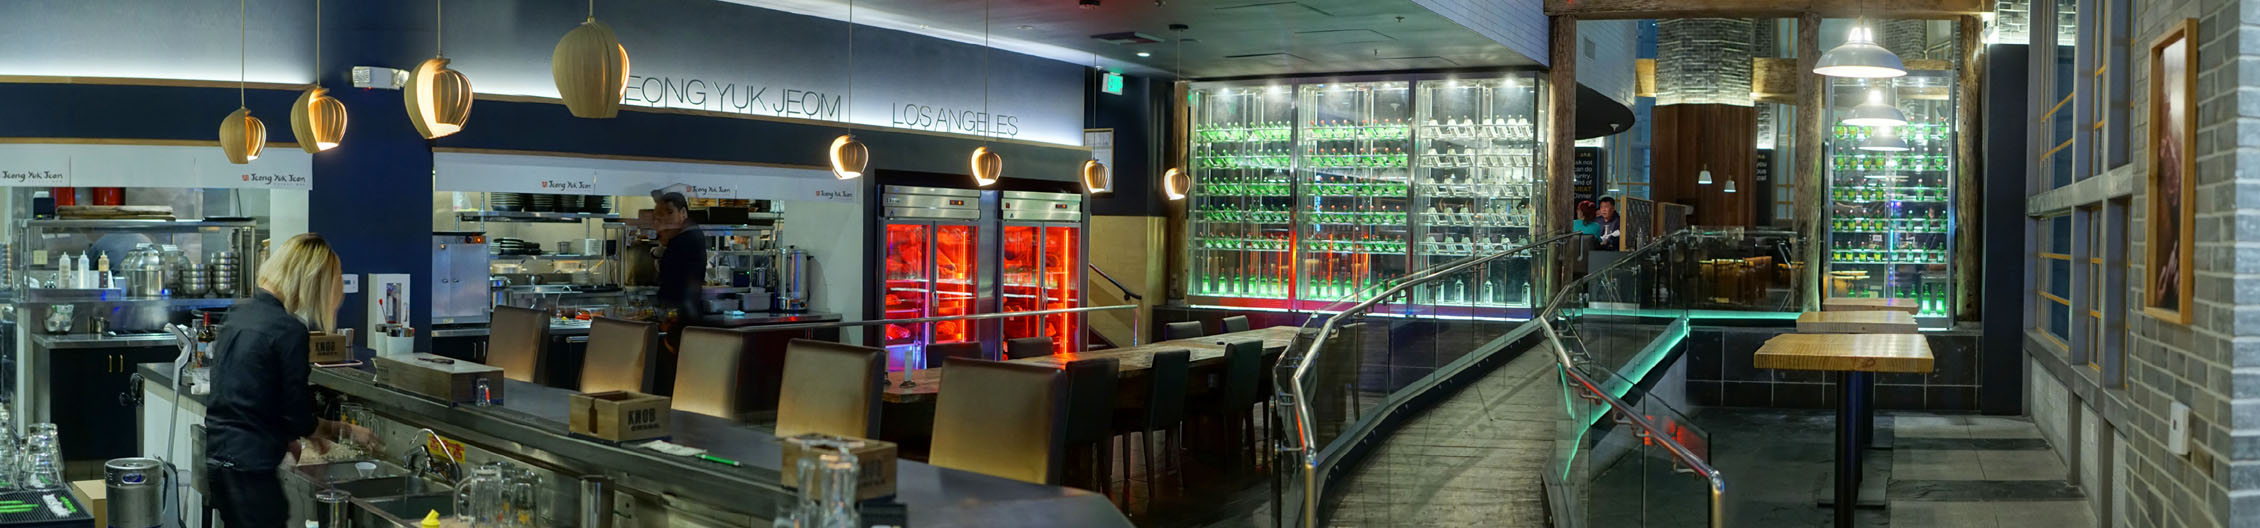 Jeong Yuk Jeom Bar/Lounge Area